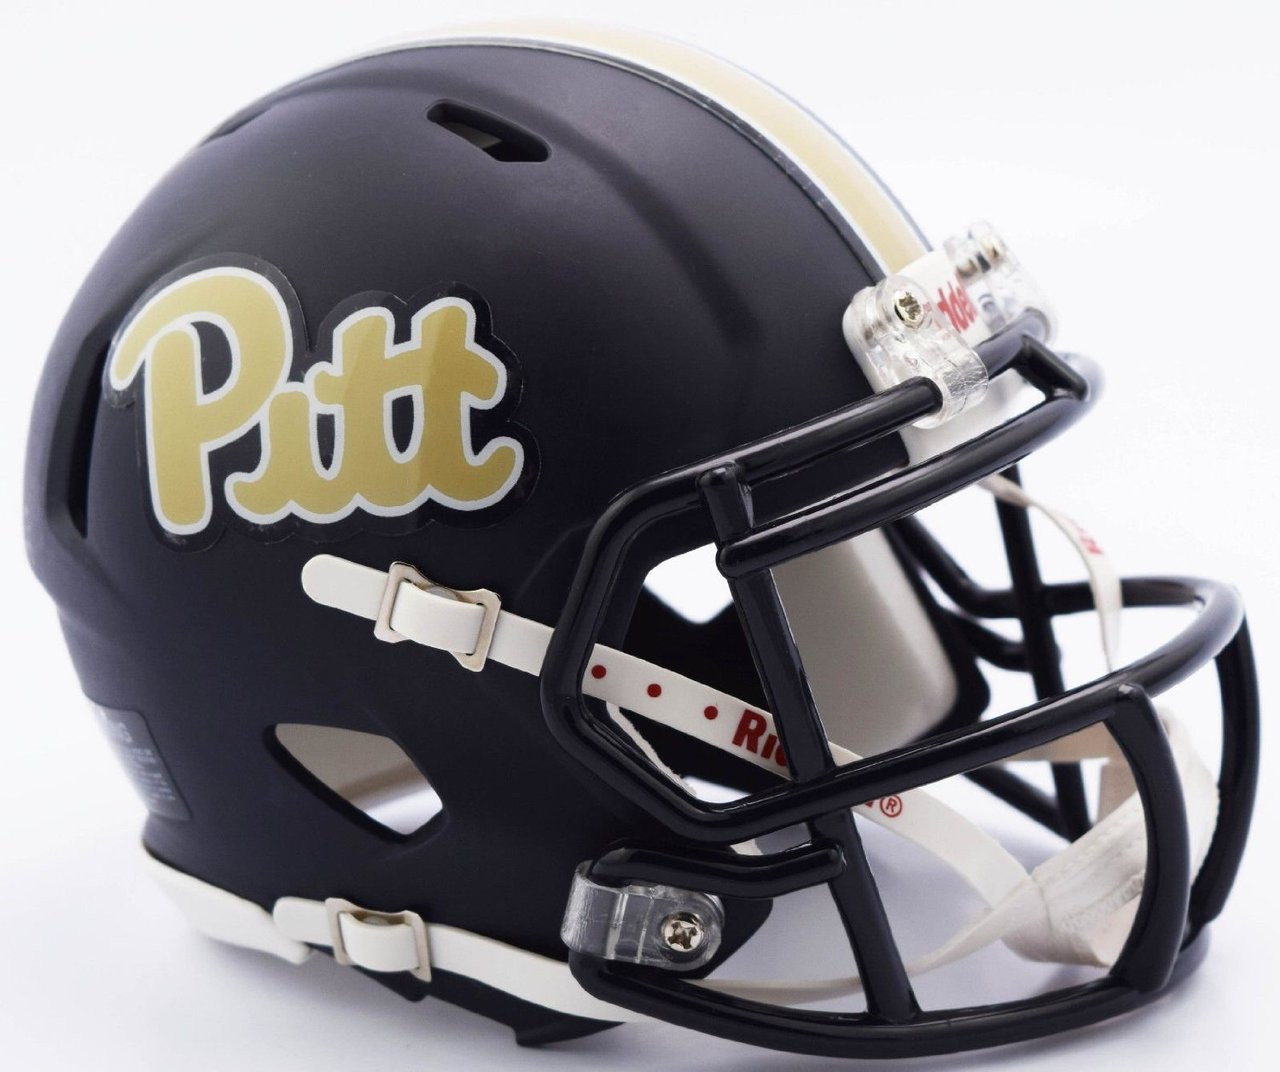 PITTSBURGH PANTHERS PITT NCAA Riddell SPEED Full Size Replica Football Helmet